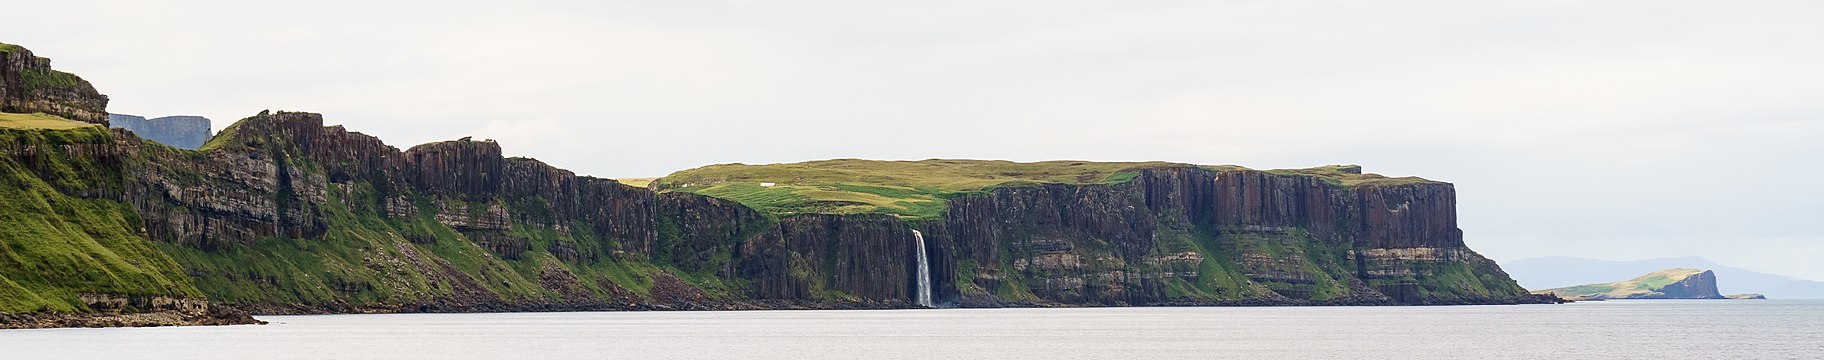 Panorama of Mealt Waterfall with Kilt Rock, Isle of Skye.jpg